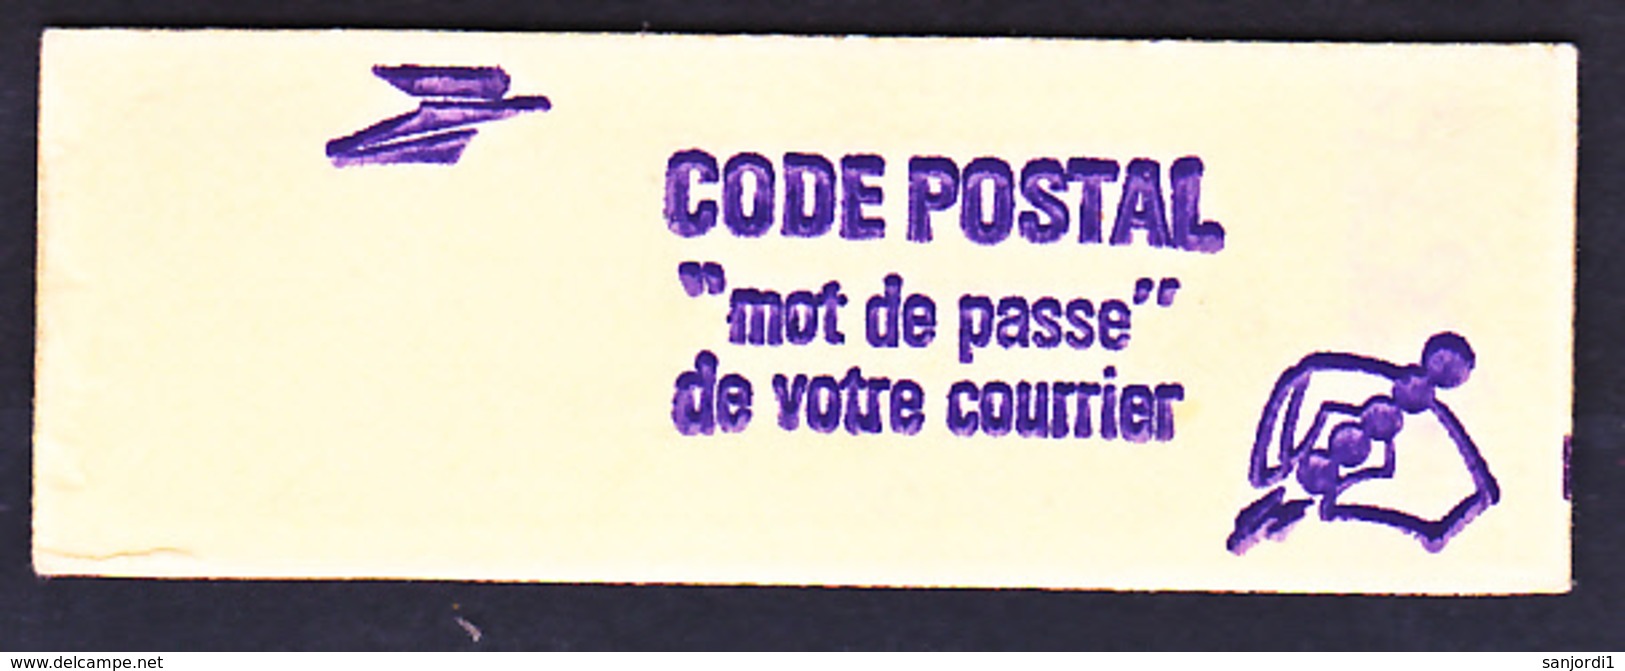 France 2059 C1 Carnet Sabine Ouvert  Neuf ** TB MNH  Sin Charnela Cote 8 - Modernos : 1959-…